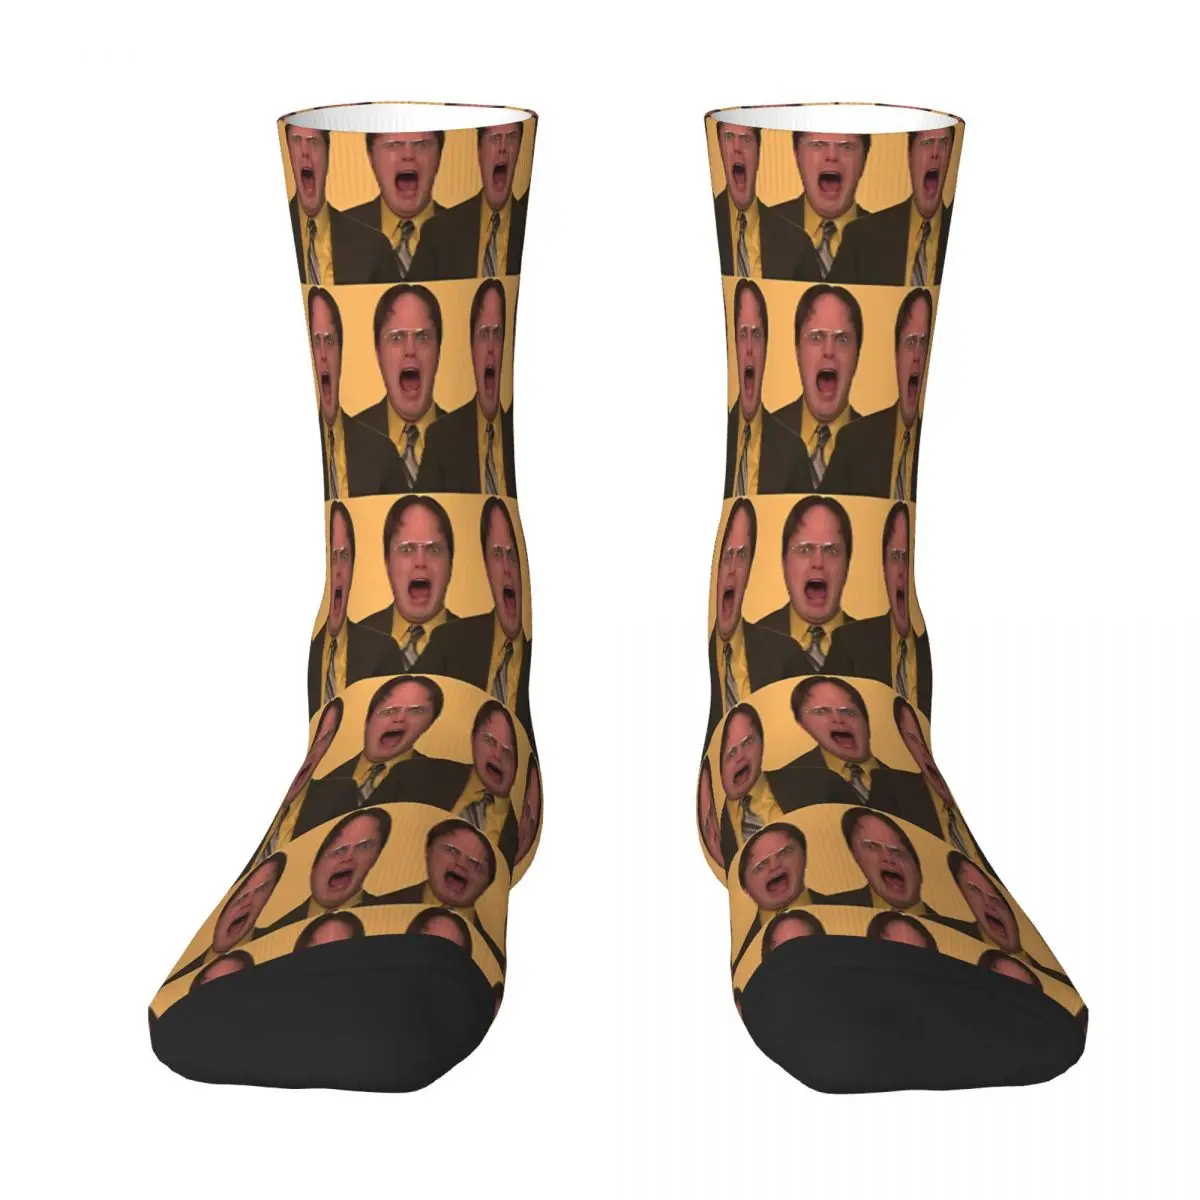 

Dwight Schrute Repeat Pattern In Mustard Yellow Shirt Yelling The Office Michael Scott NBC Comedy Sock Socks Stockings